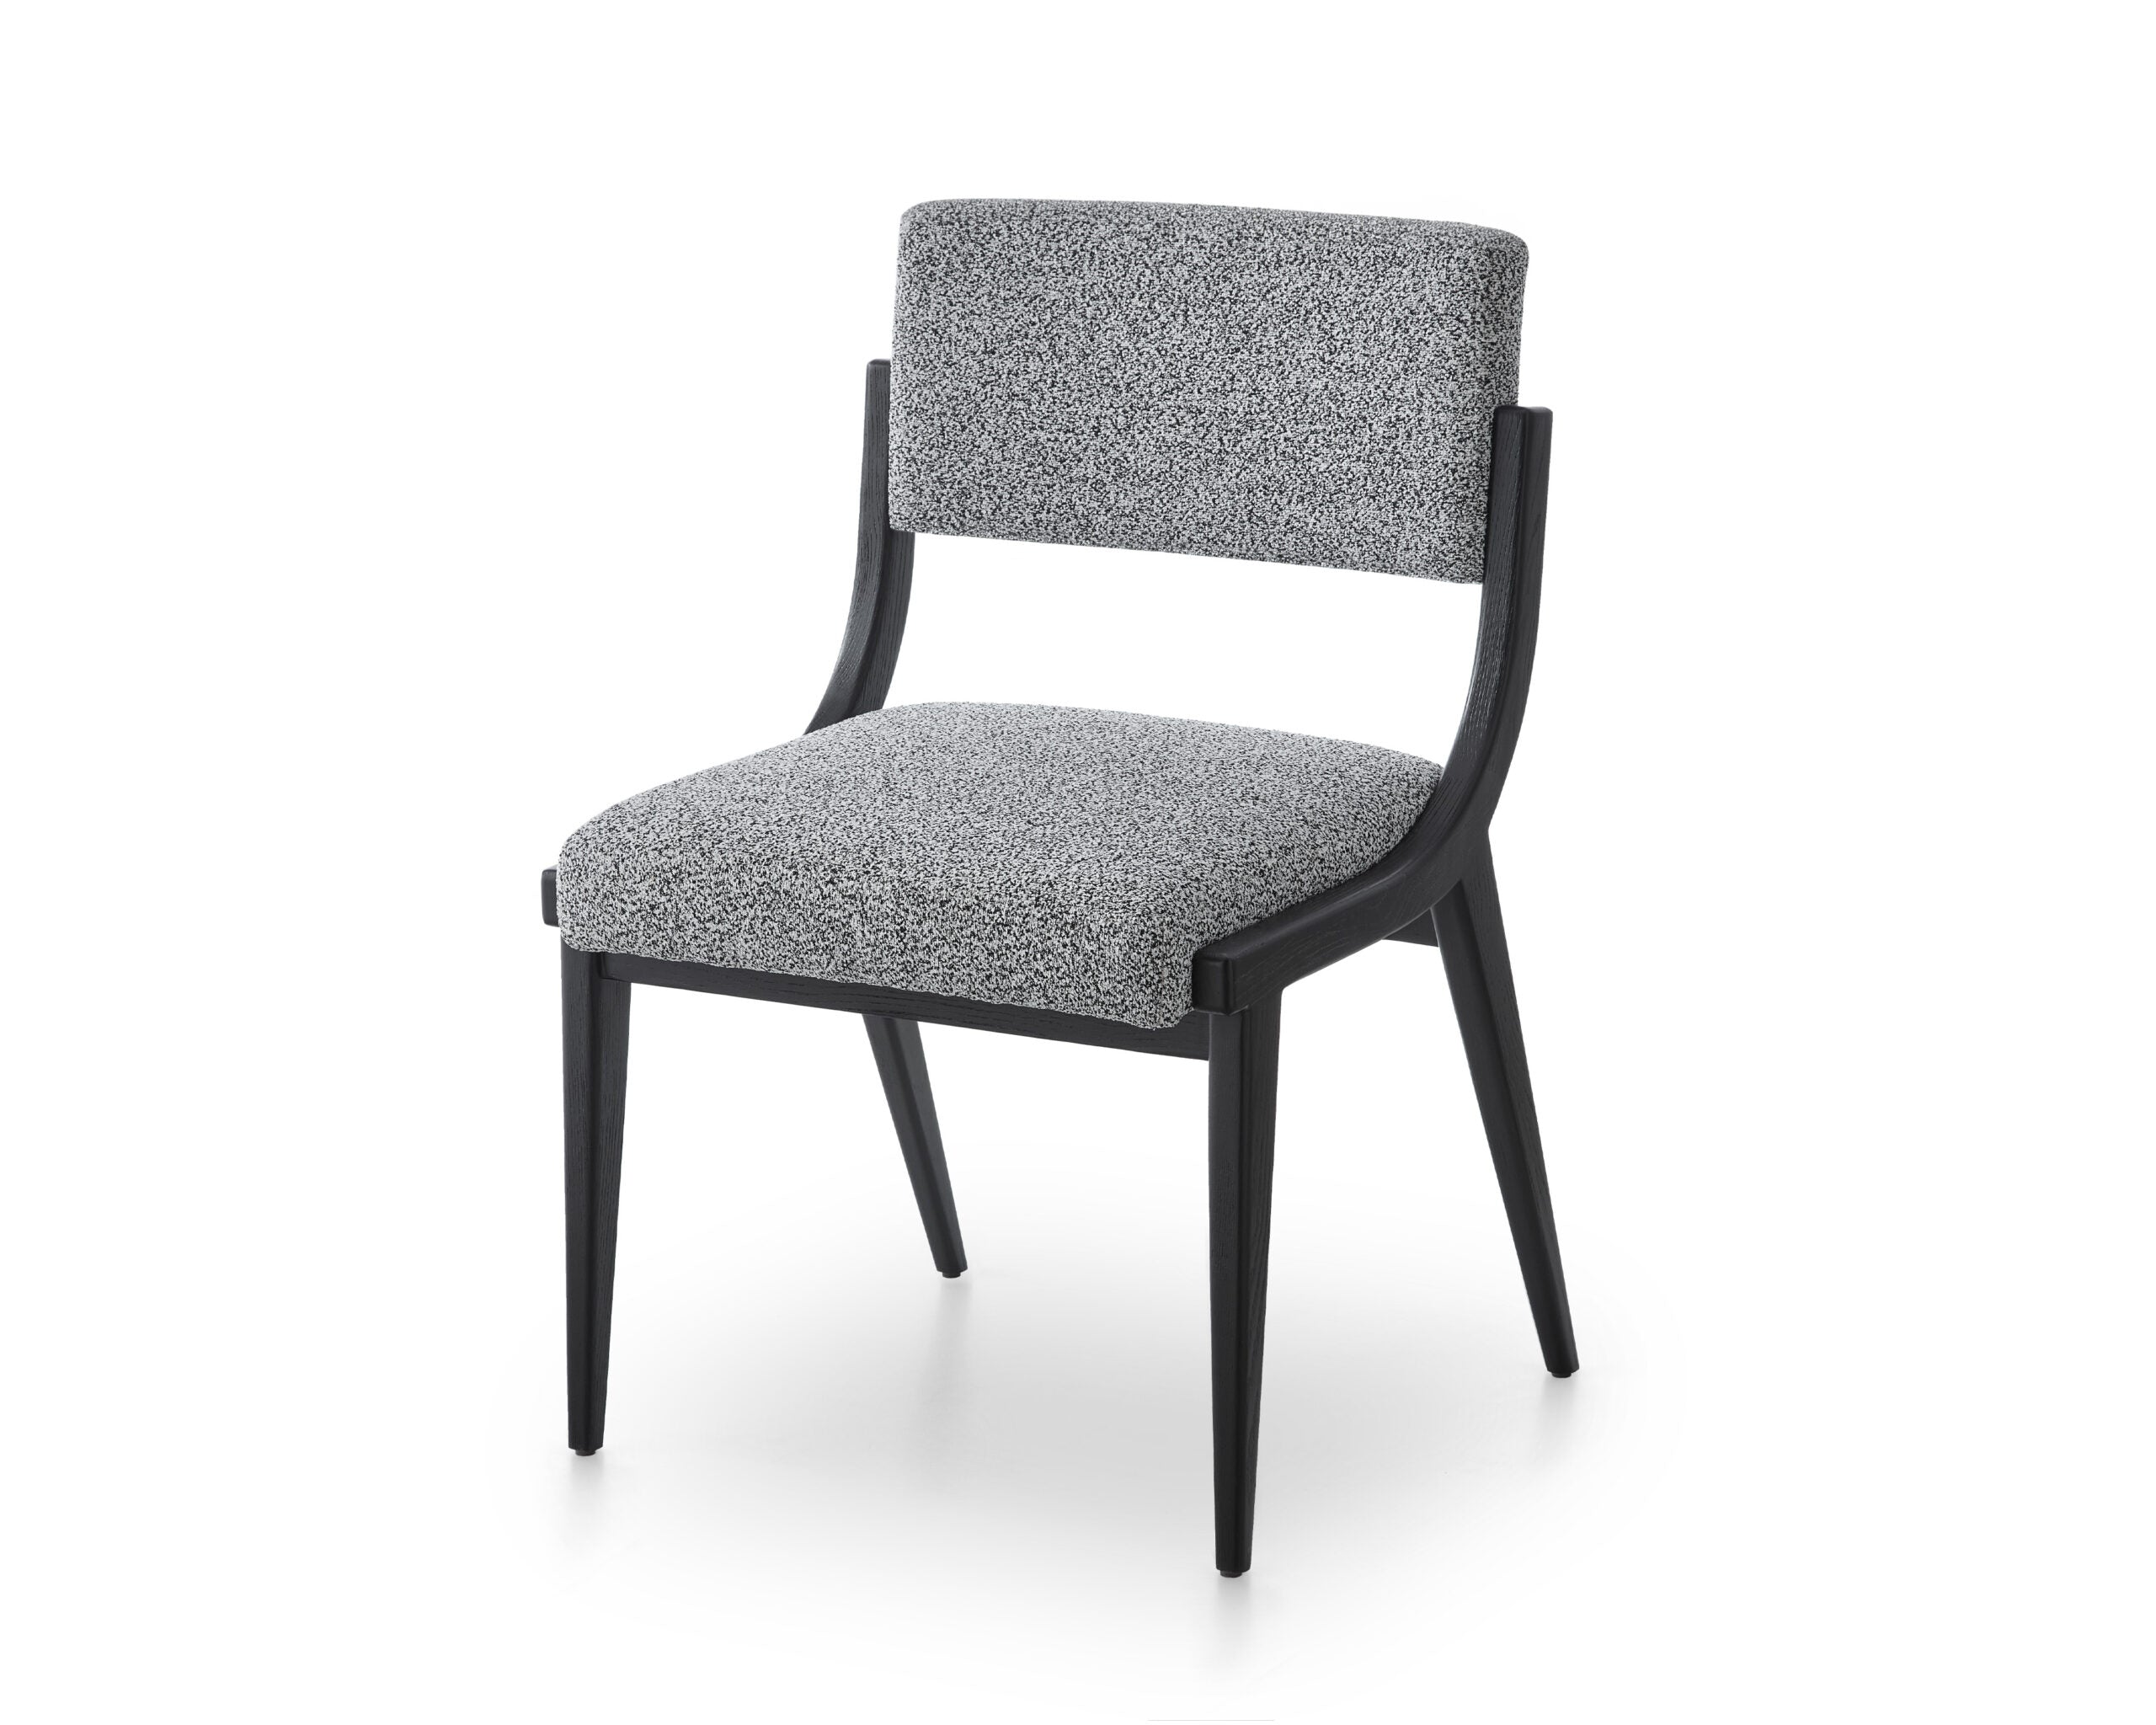 Miami dining chair – cordoba speckle grey &amp; matt black